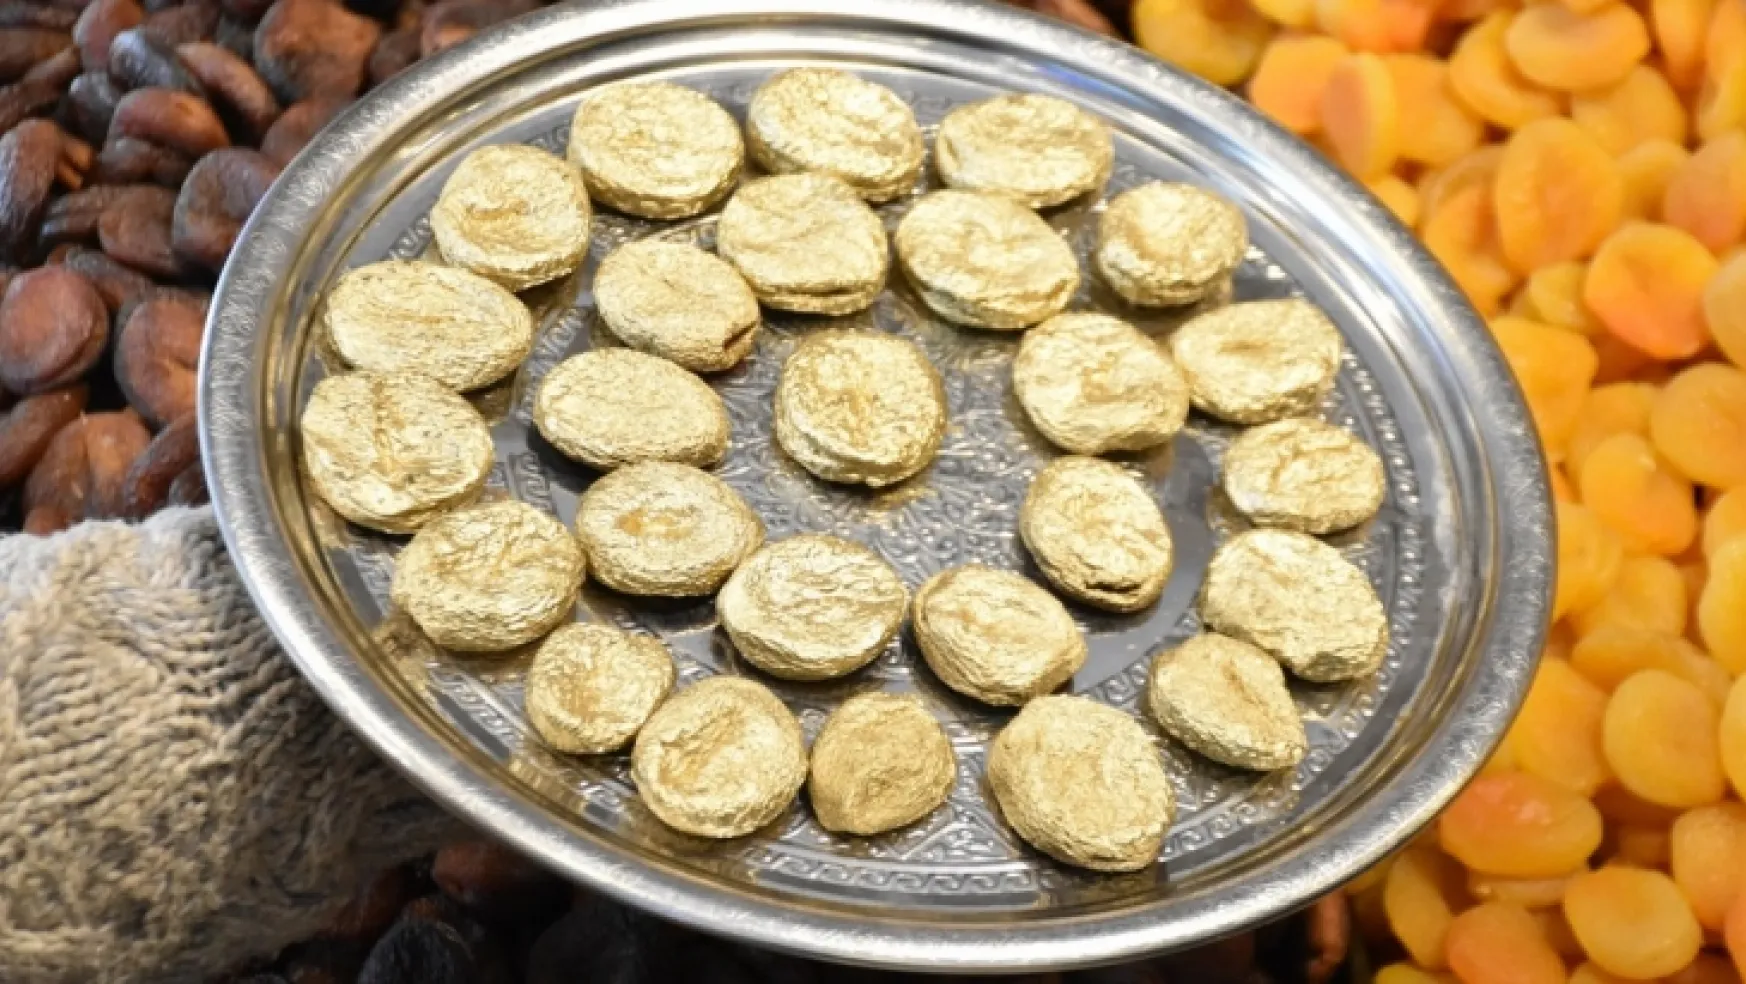 Malatya'da altın kayısının tanesi 200 liradan satışa çıktı